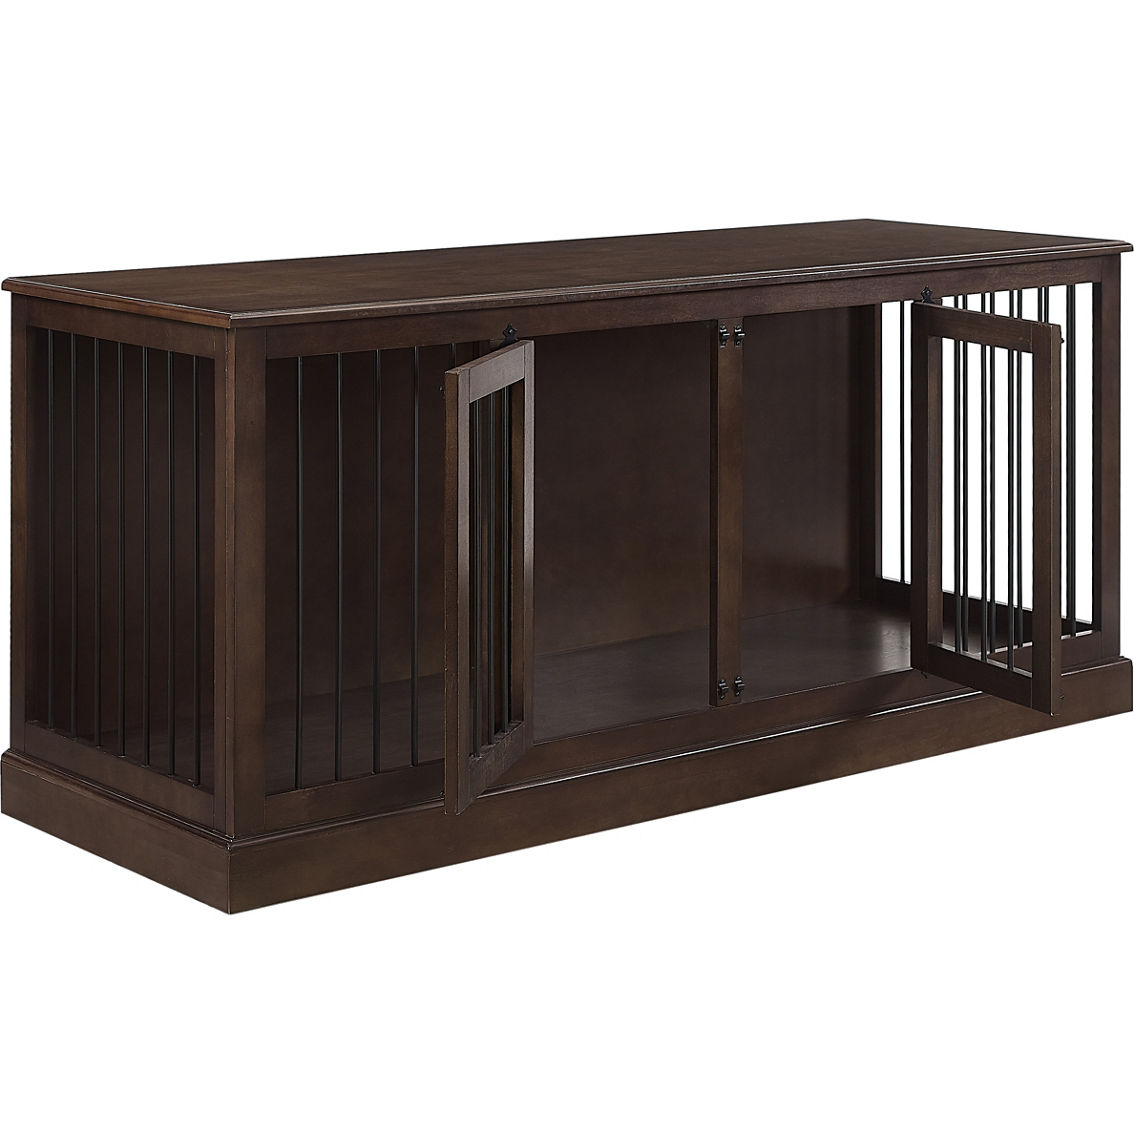 Crosley Furniture Winslow Medium Credenza Pet Crate, Dark Brown - Image 4 of 7